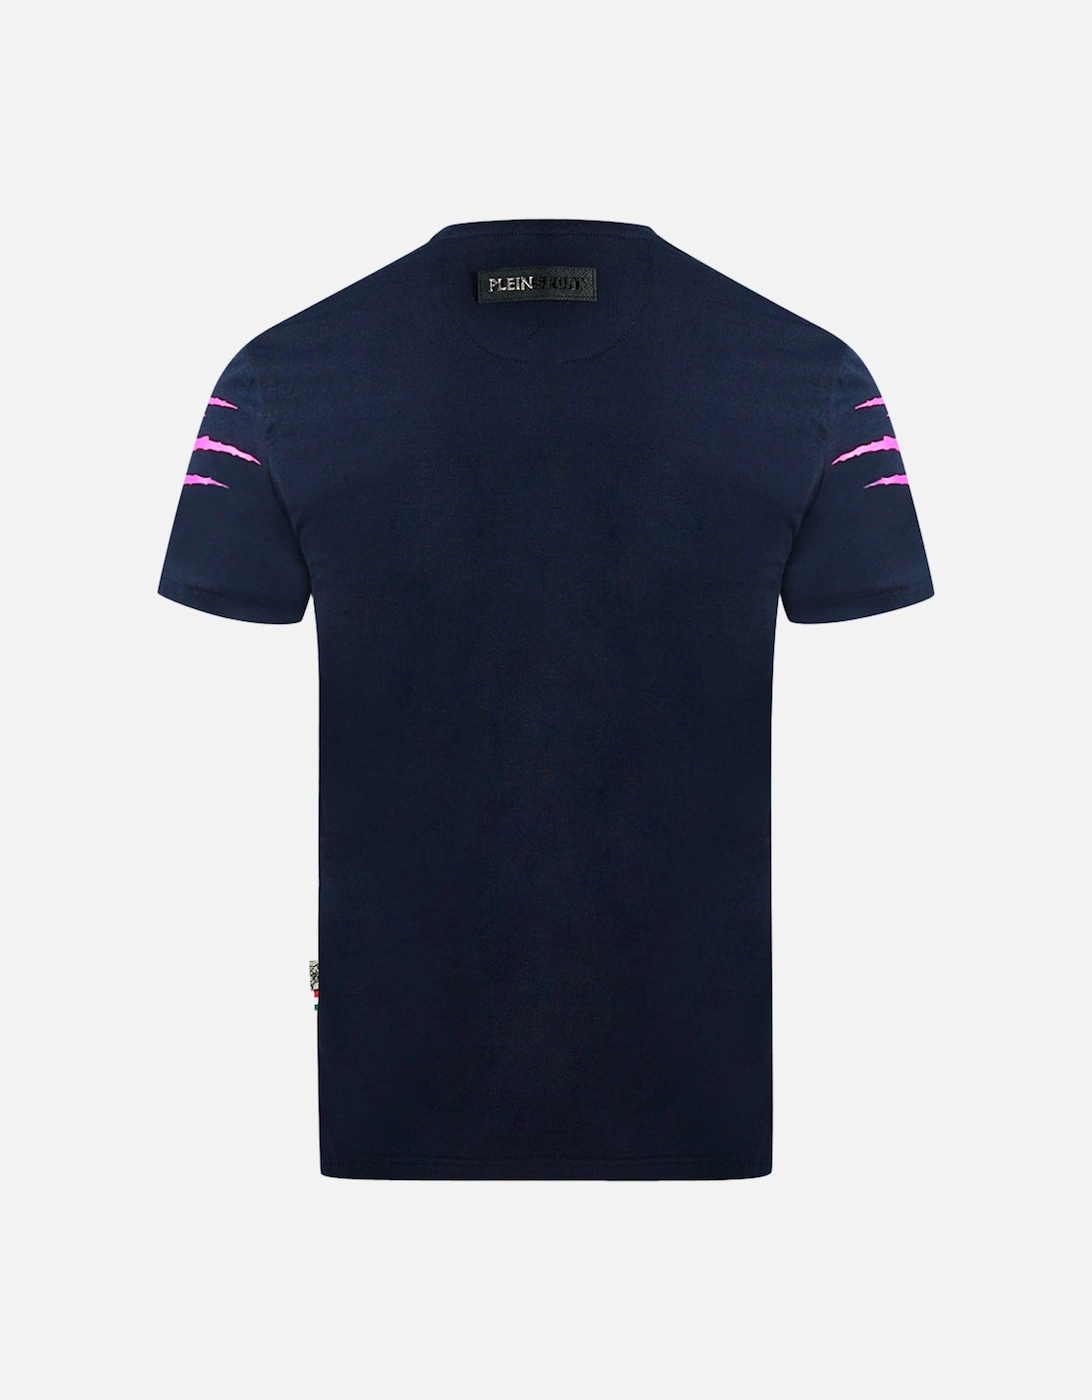 Plein Sport Tiger Scratch Navy Blue T-Shirt